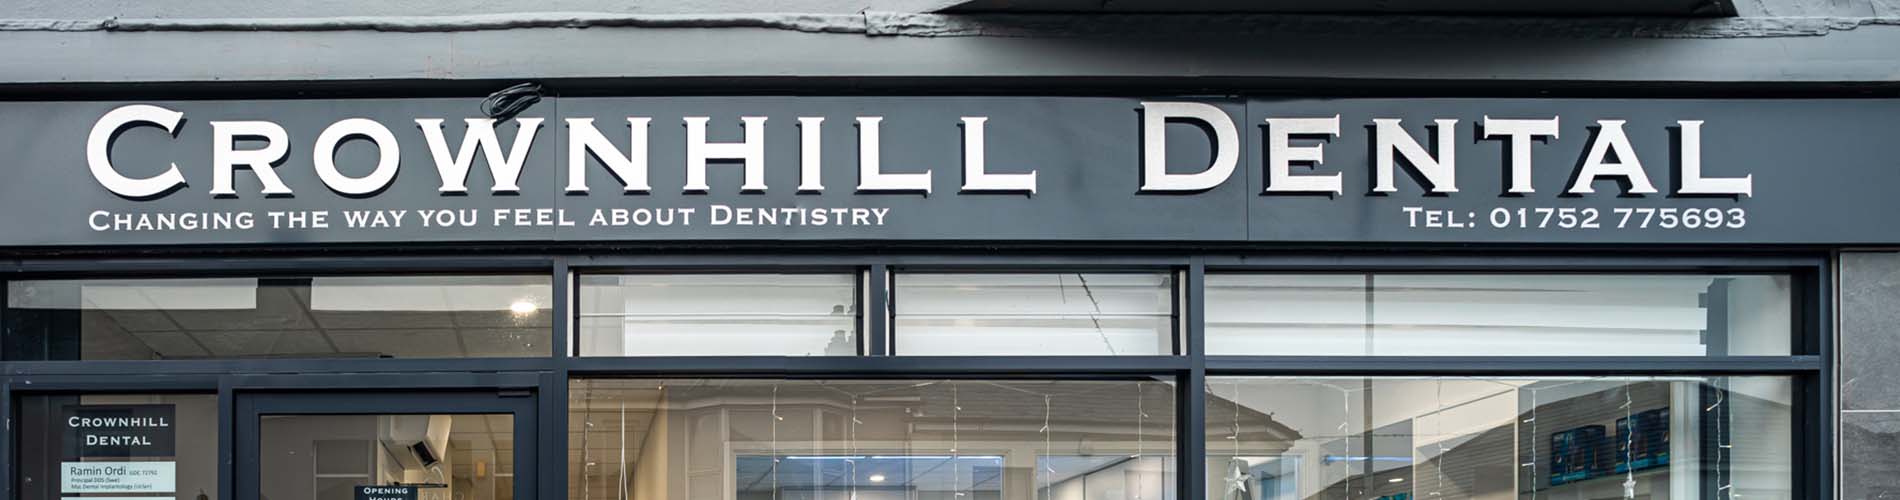 crownhill dental